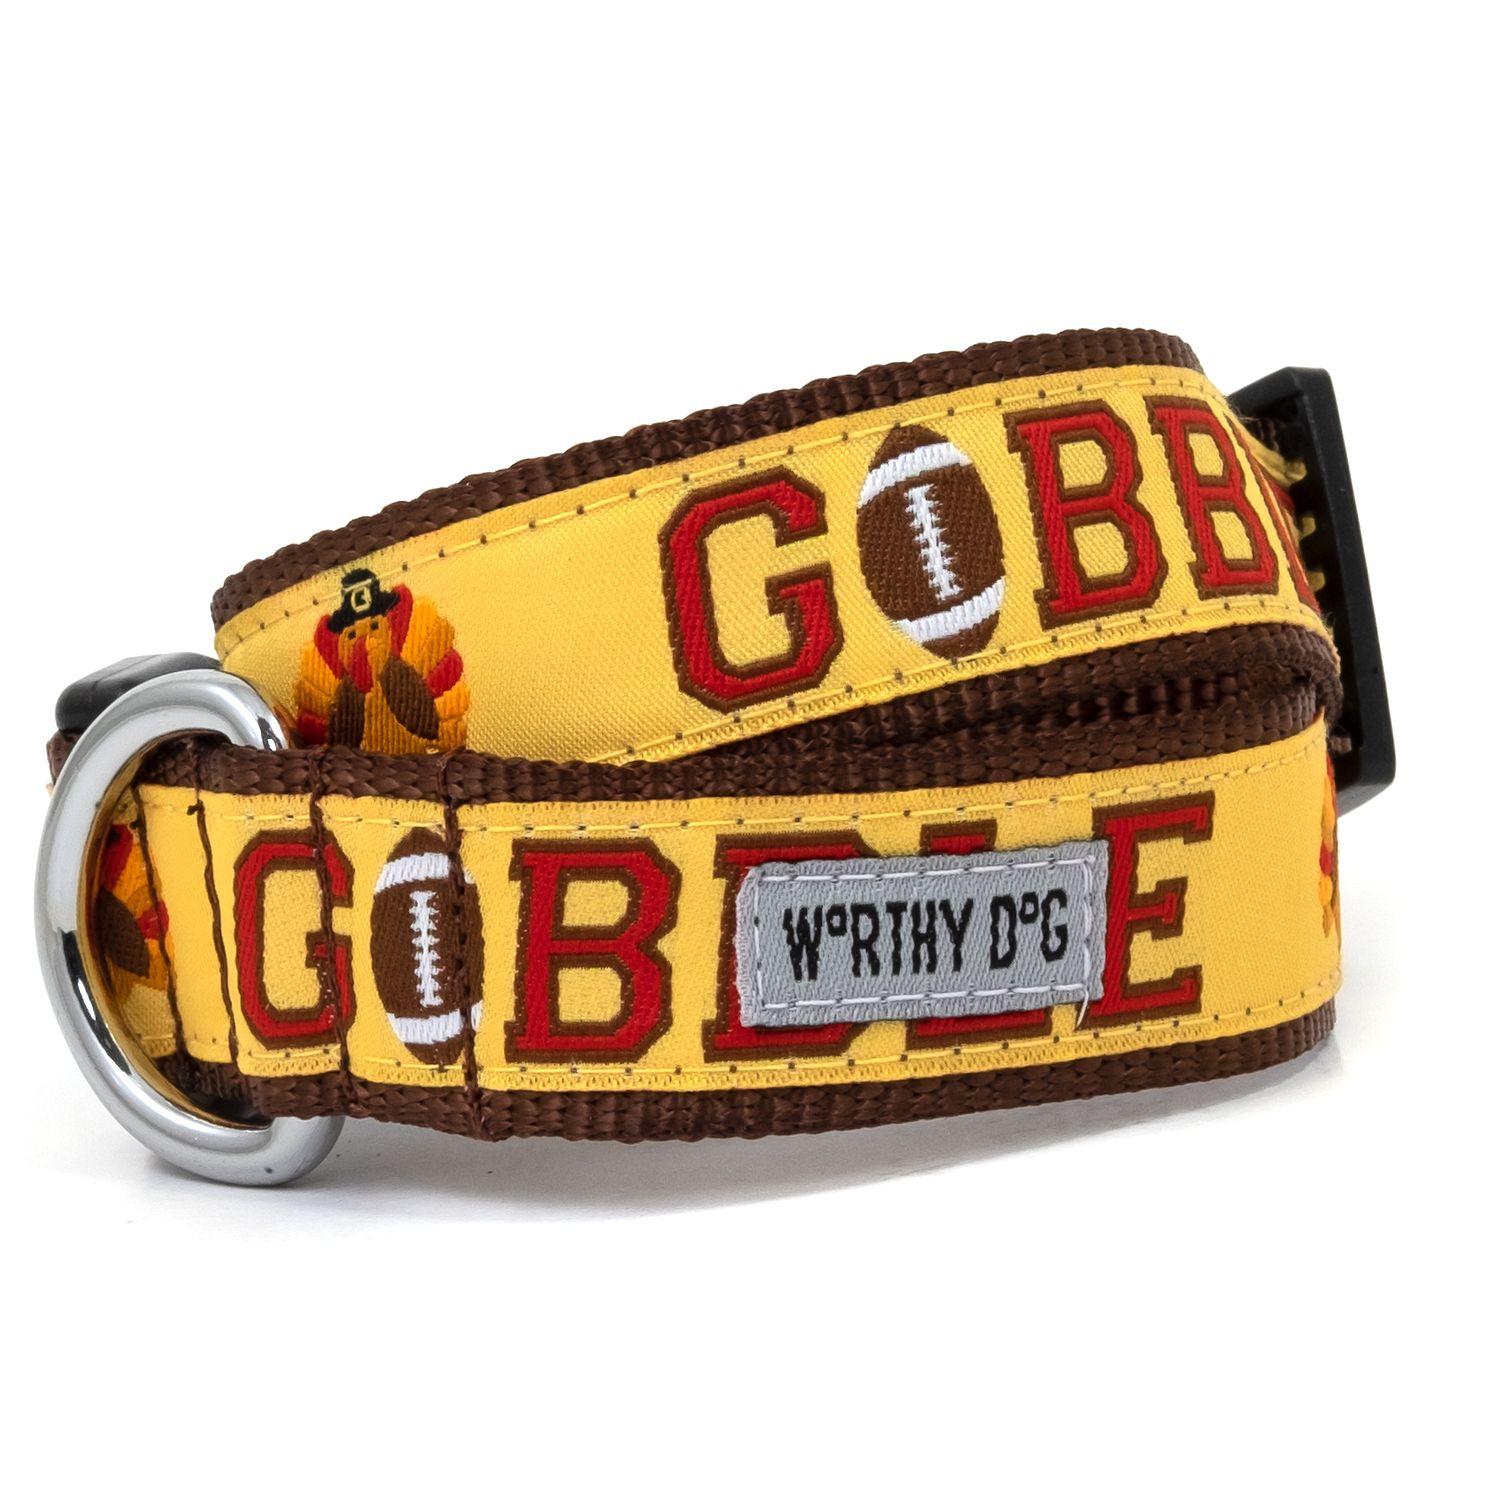 Worthy Dog Gobble Gobble Dog Collar